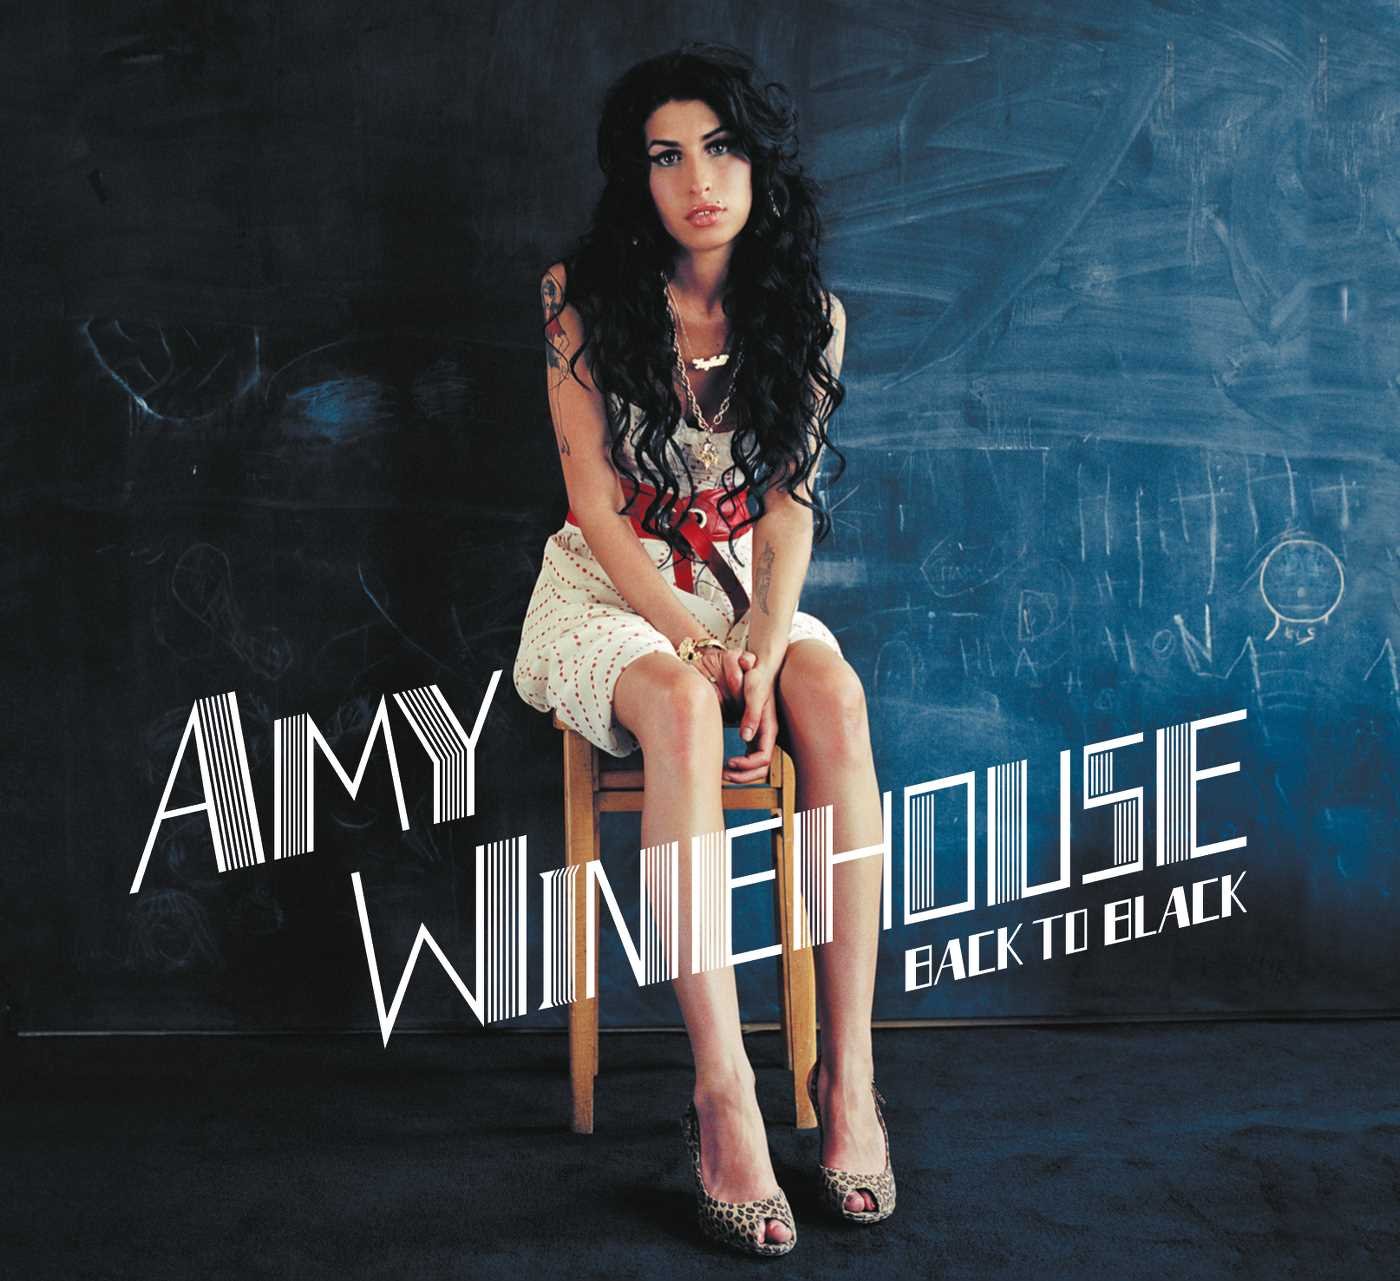 Amy Winehouse "Back to black" LP